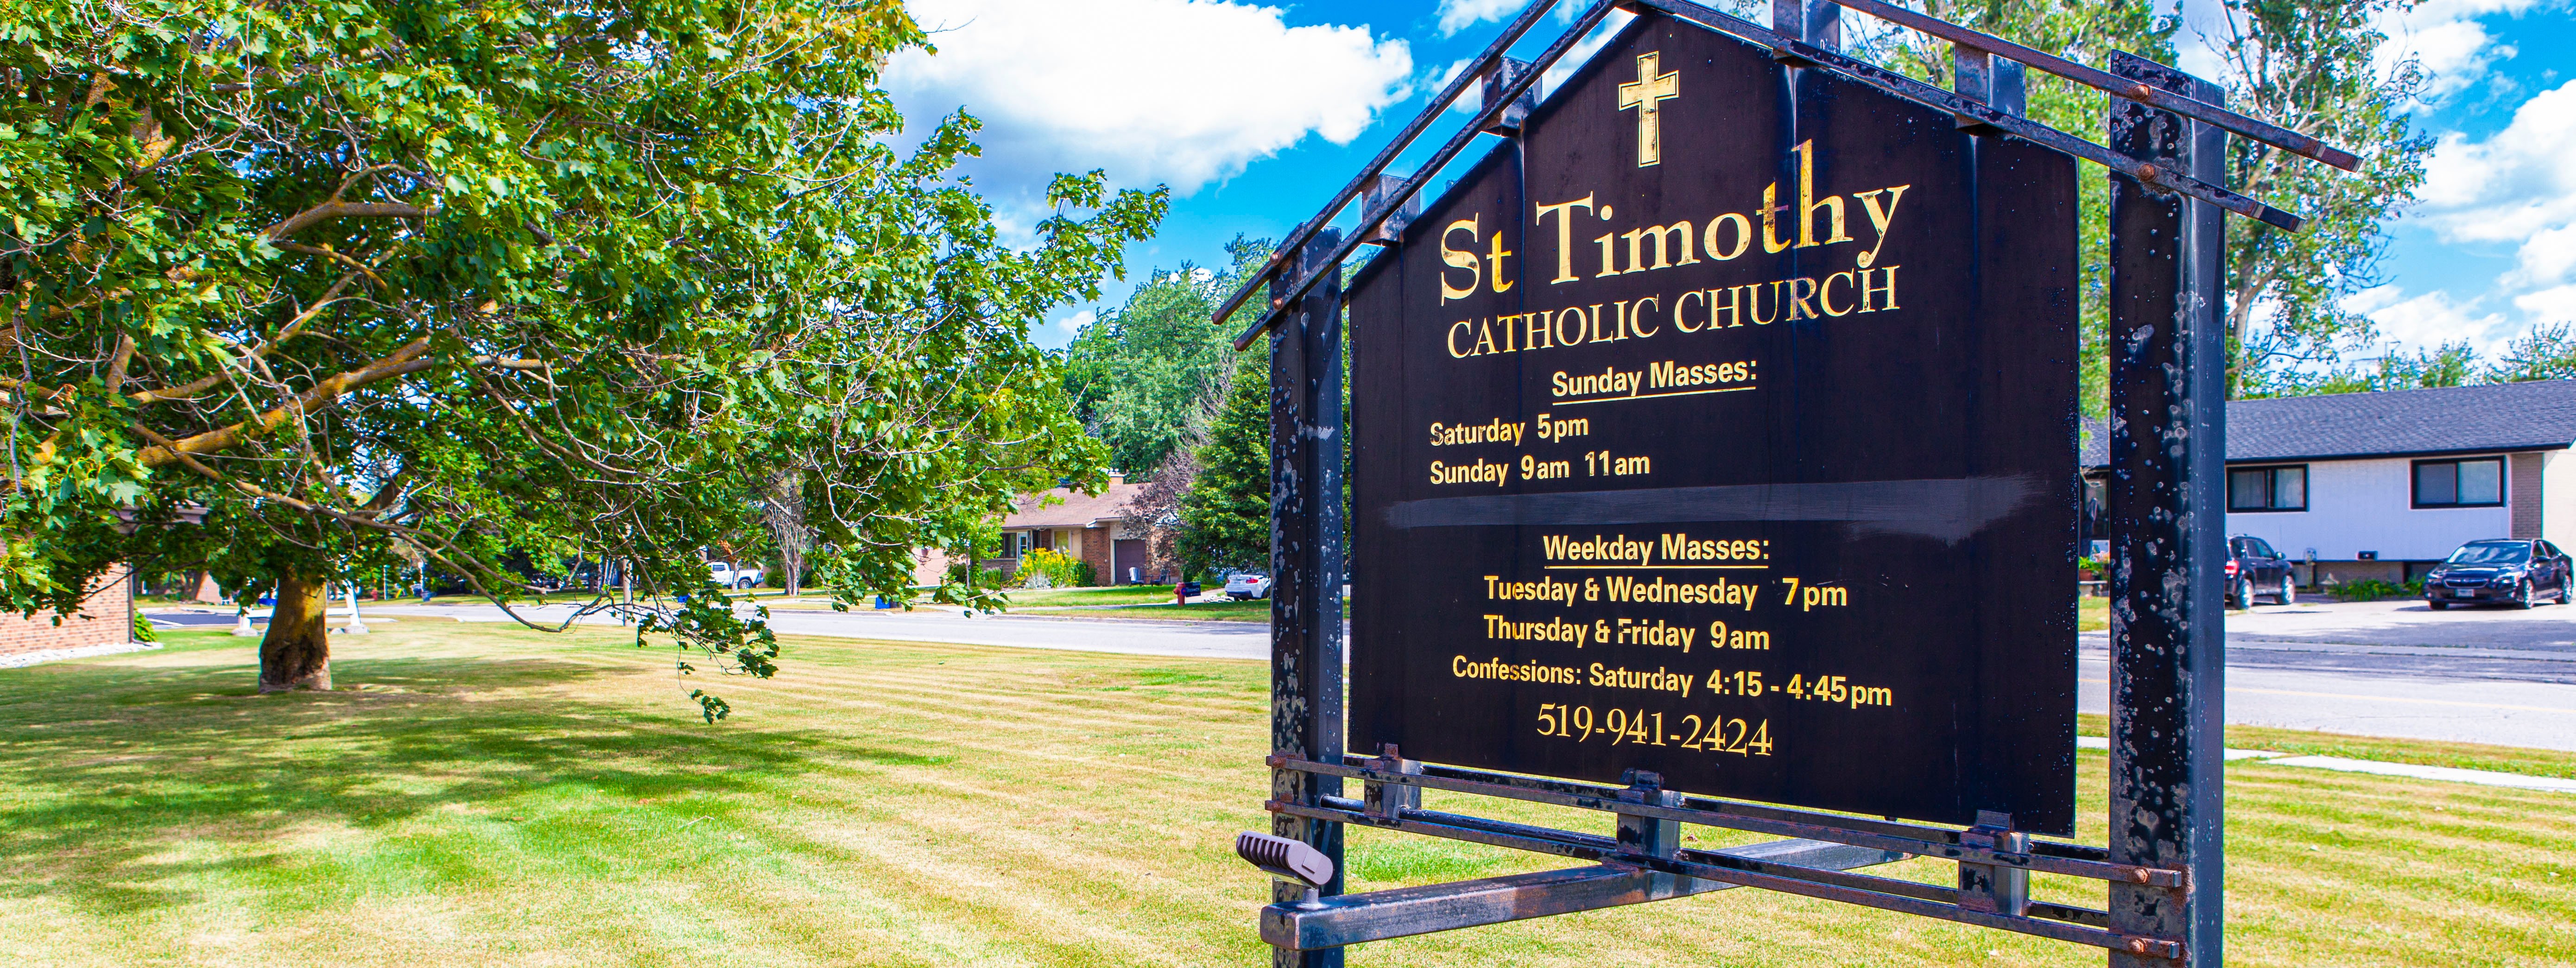 St. Timothy Parish, Orangeville - Event Listing